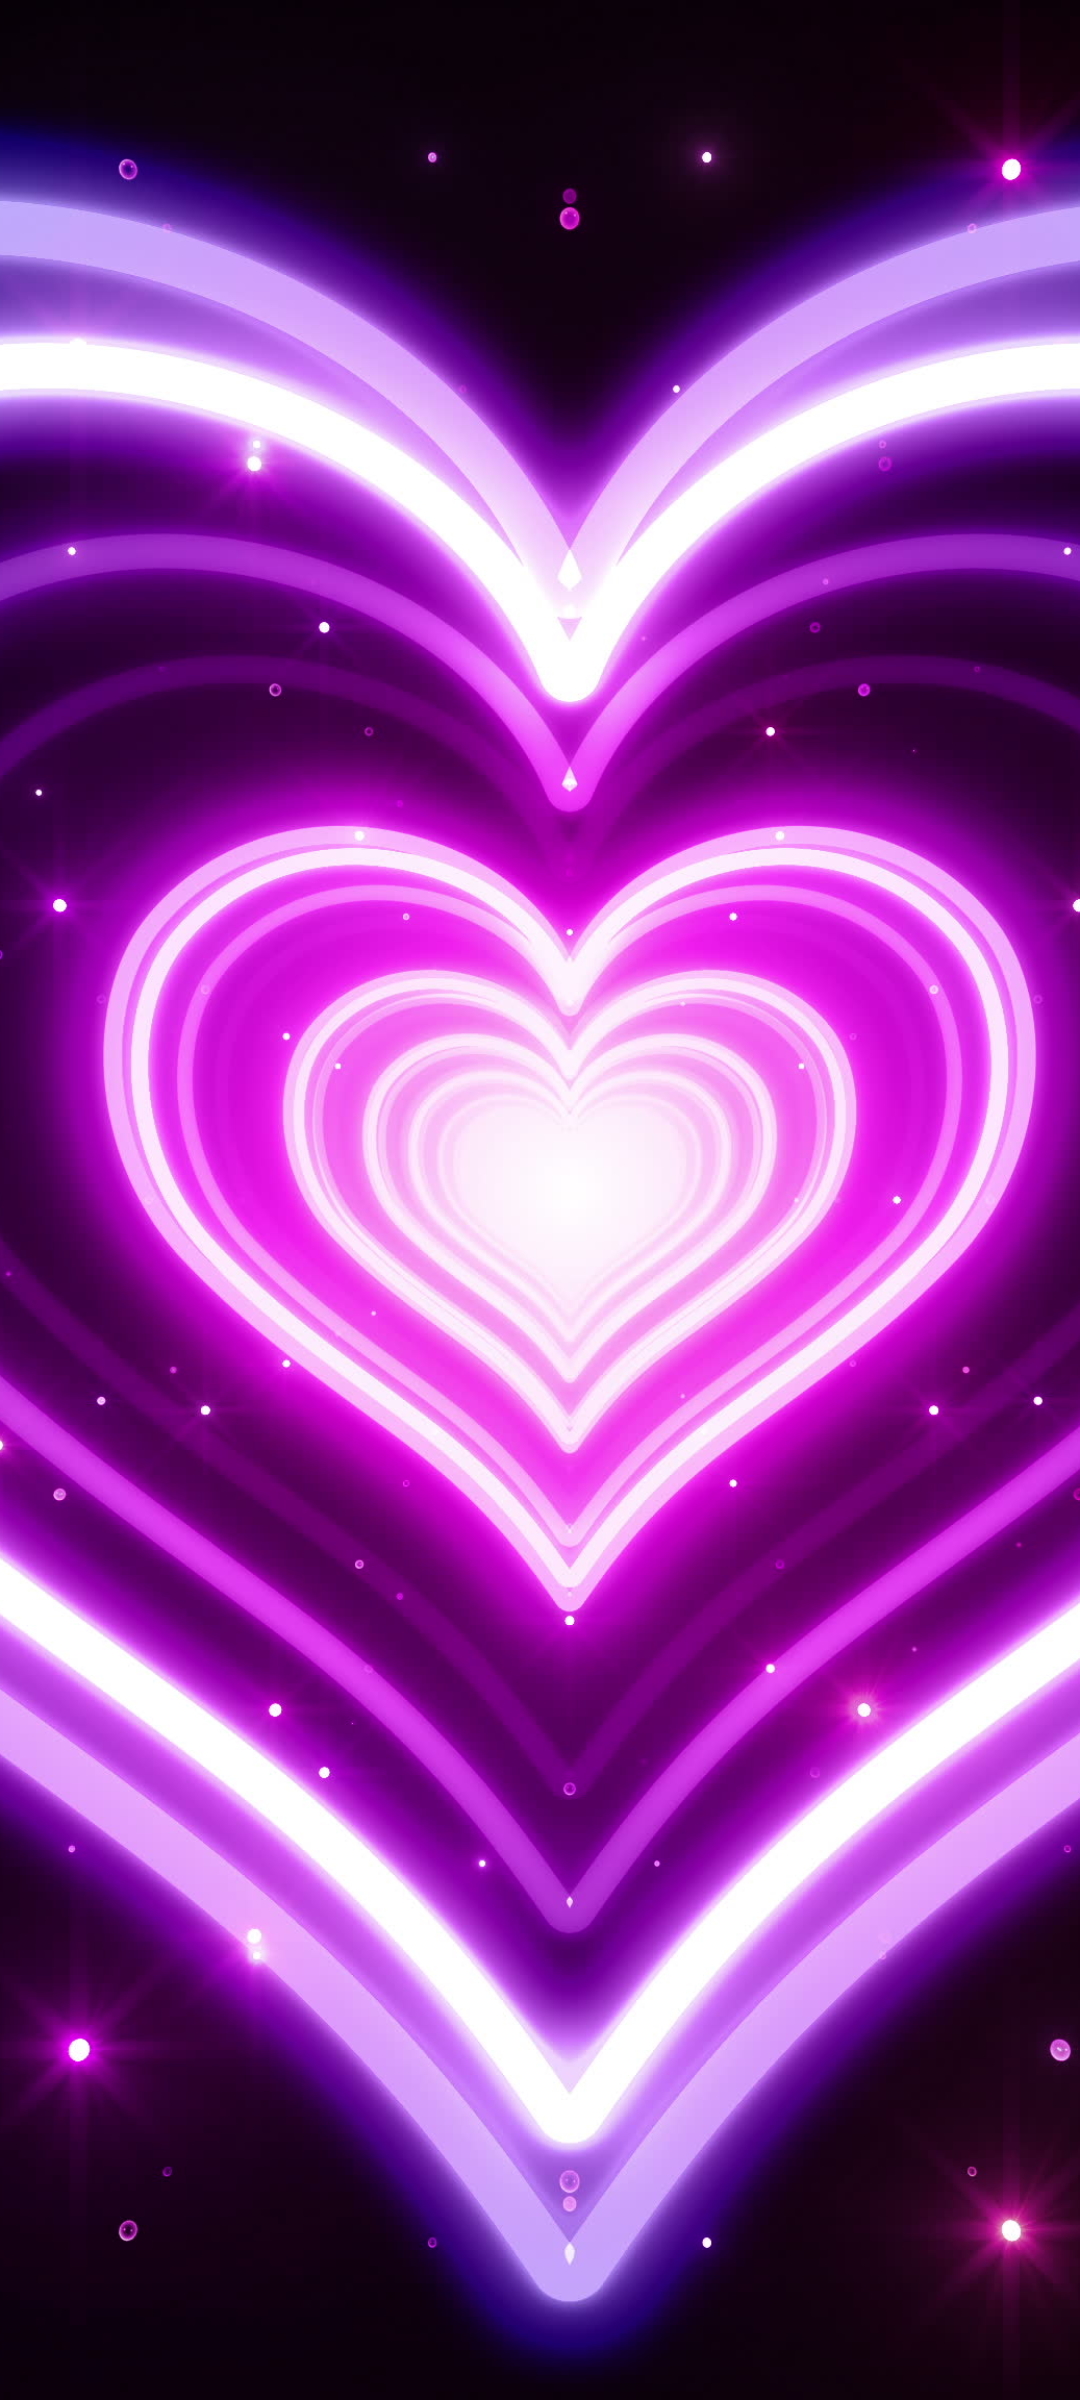 30 Purple Hearts Background Illustrations RoyaltyFree Vector Graphics   Clip Art  iStock